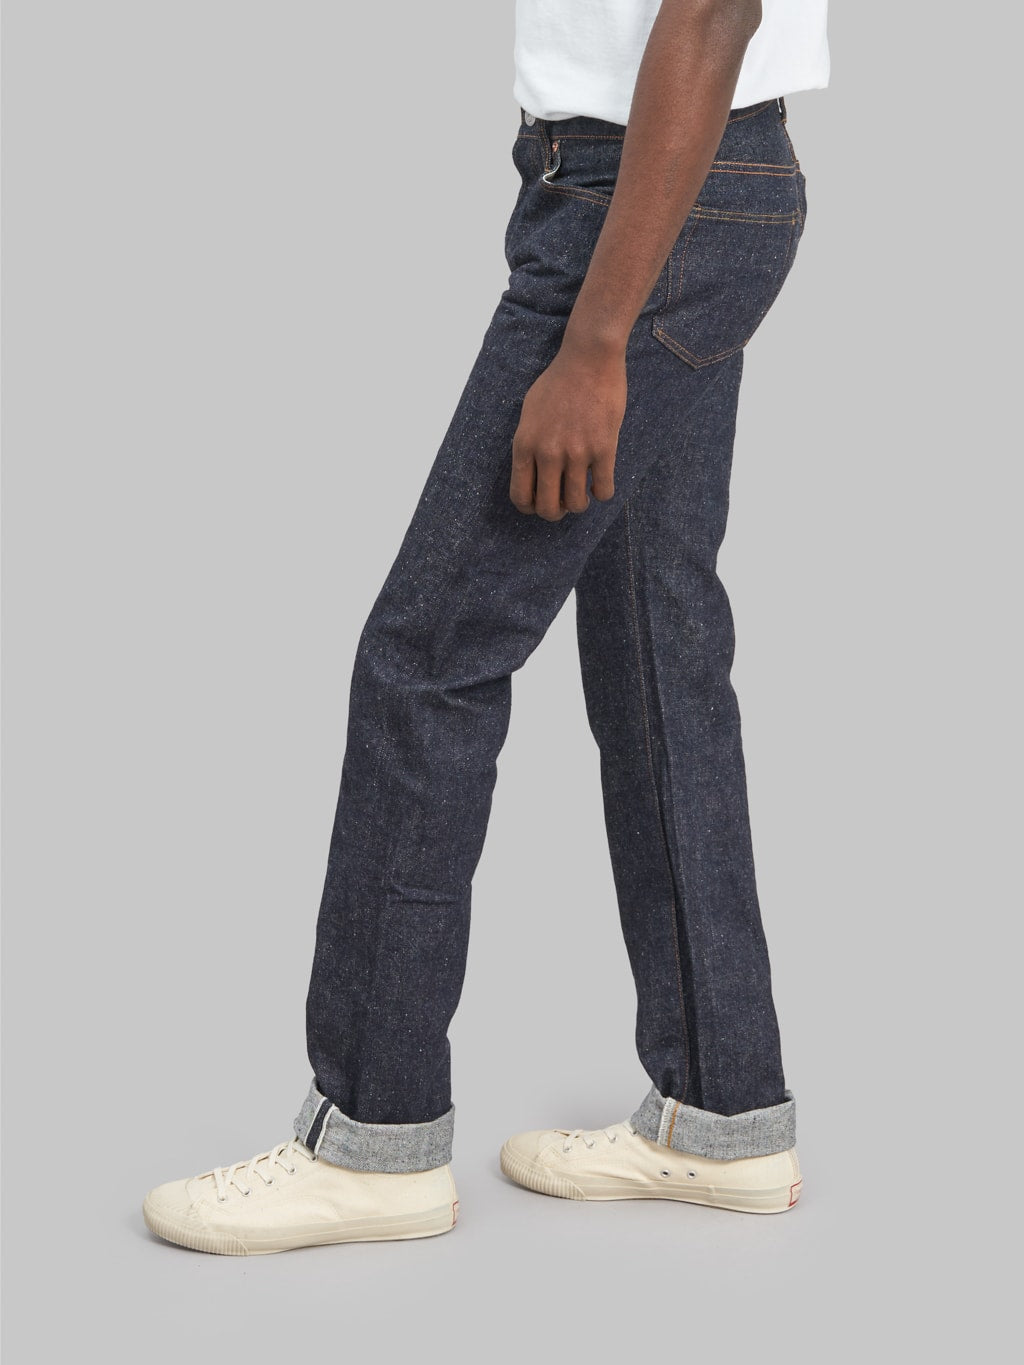 Samurai Jeans S0710XX "Otokogi" 15oz Slim Straight Jeans